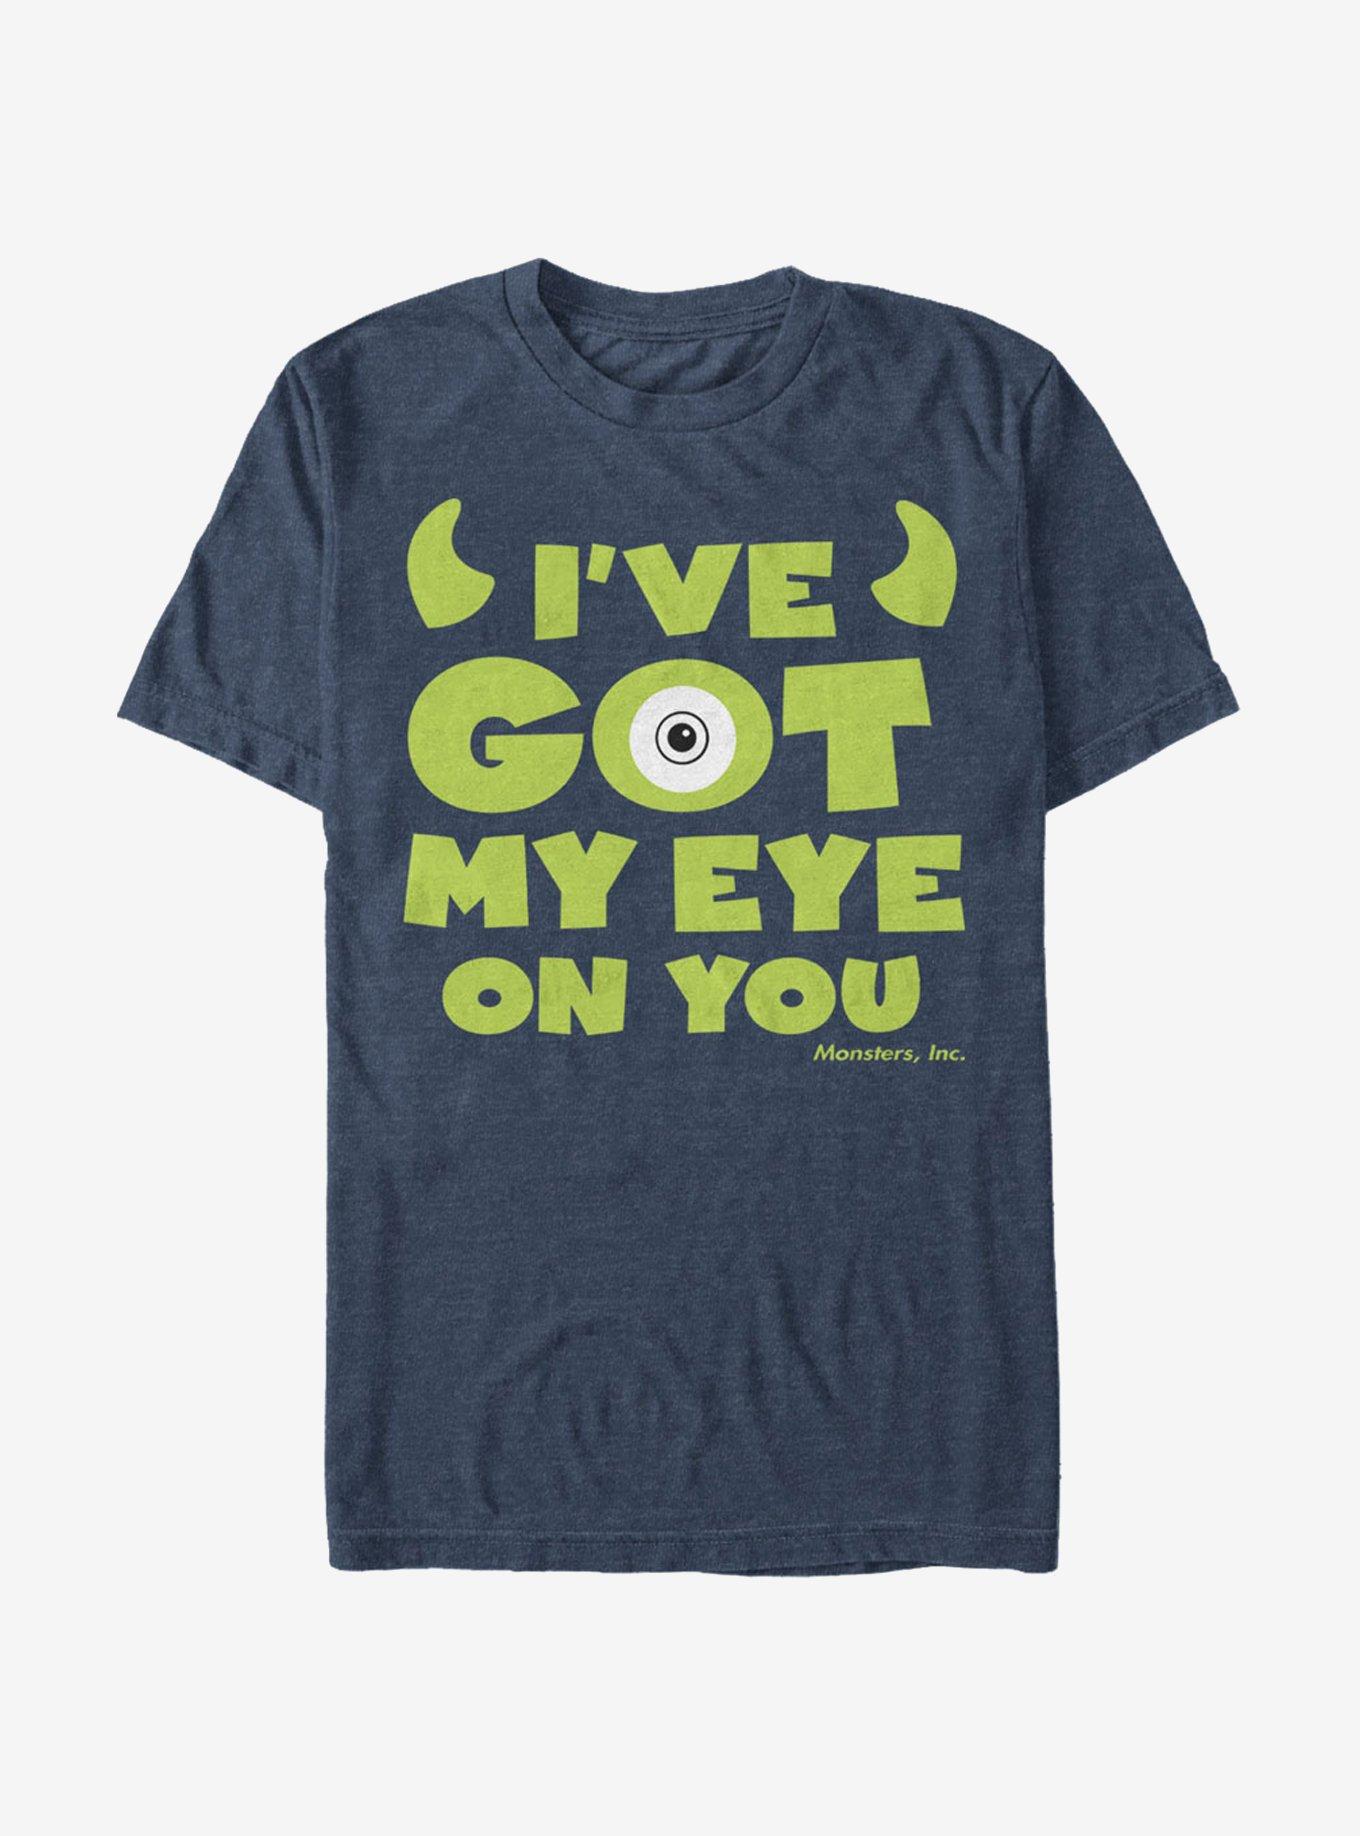 Monsters Inc. Mike Wazowski Eye on You T-Shirt